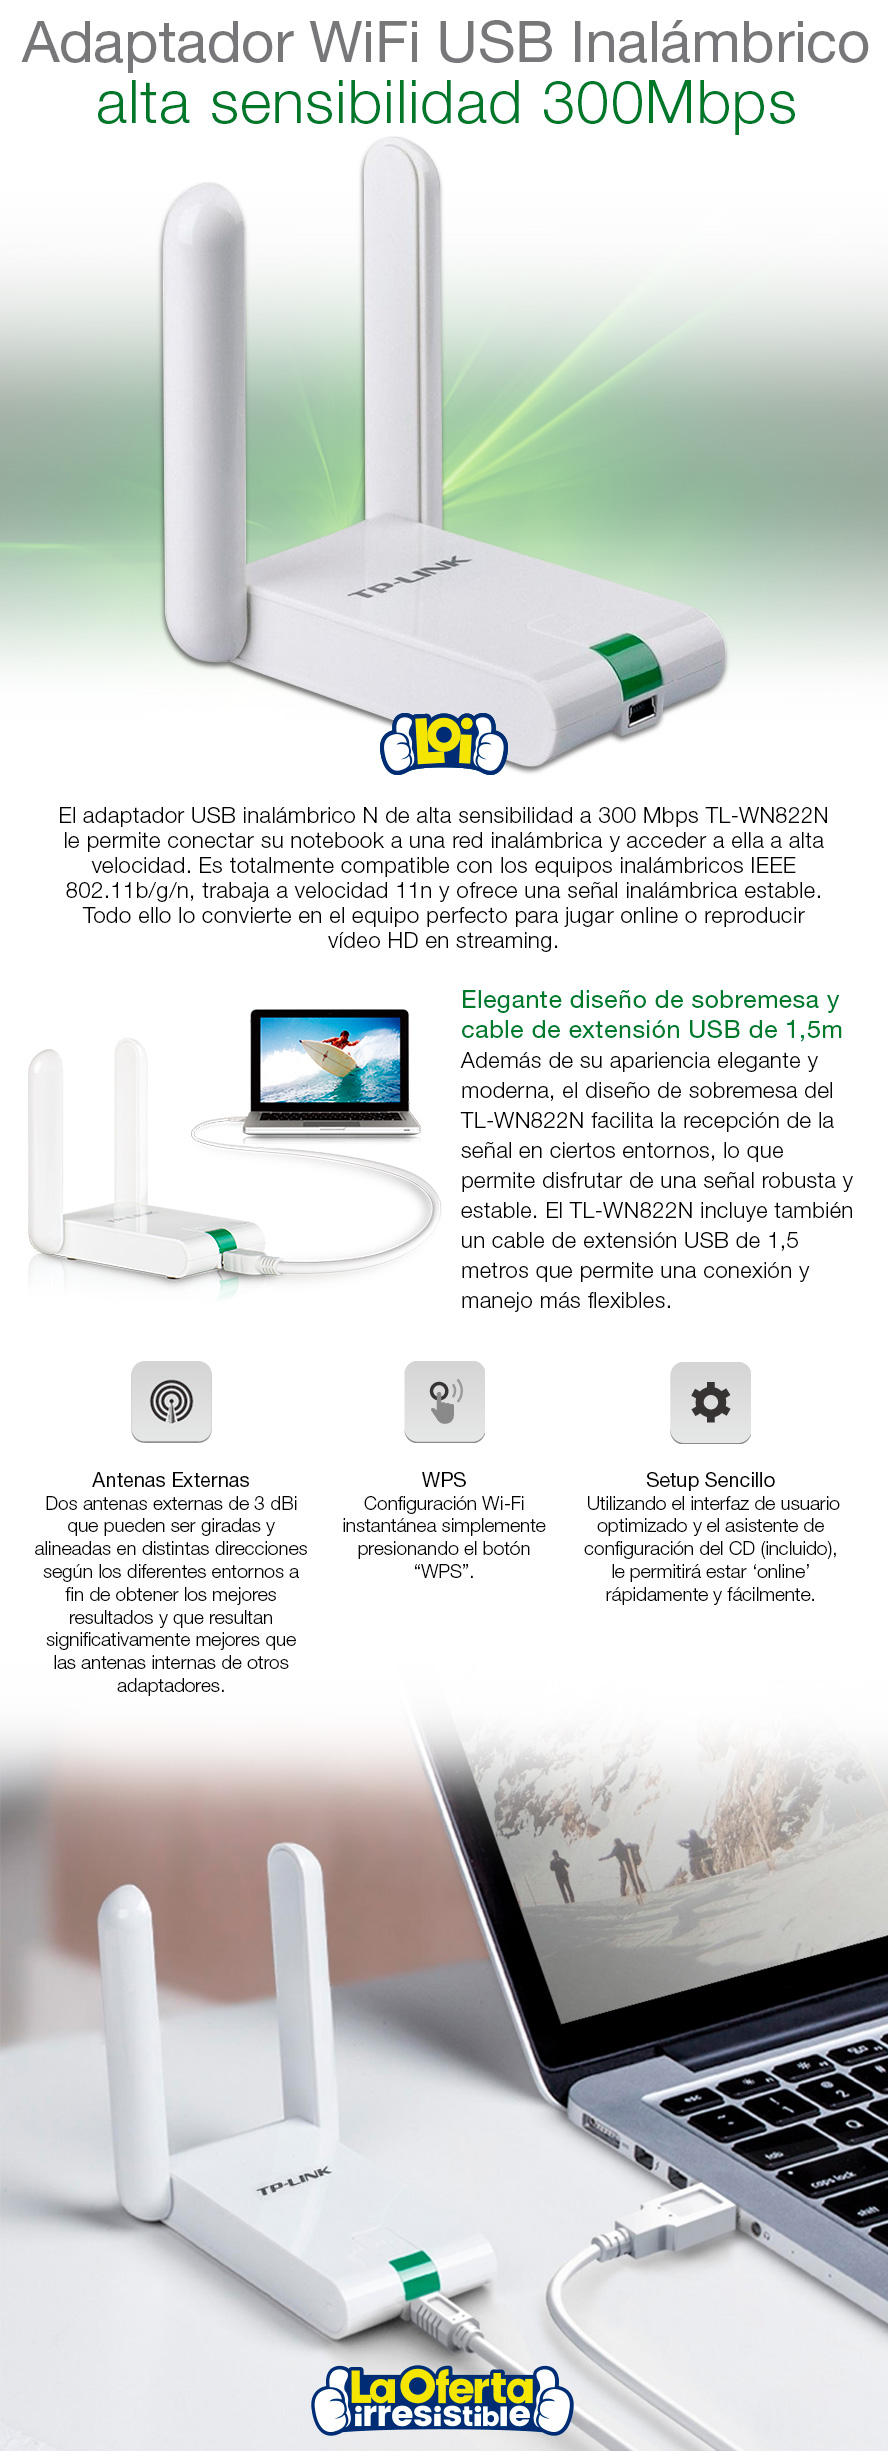 Receptor Wifi USB TP-LINK WN822N Alta Sensibilidad Doble Antena 300Mbps,  oferta LOi.